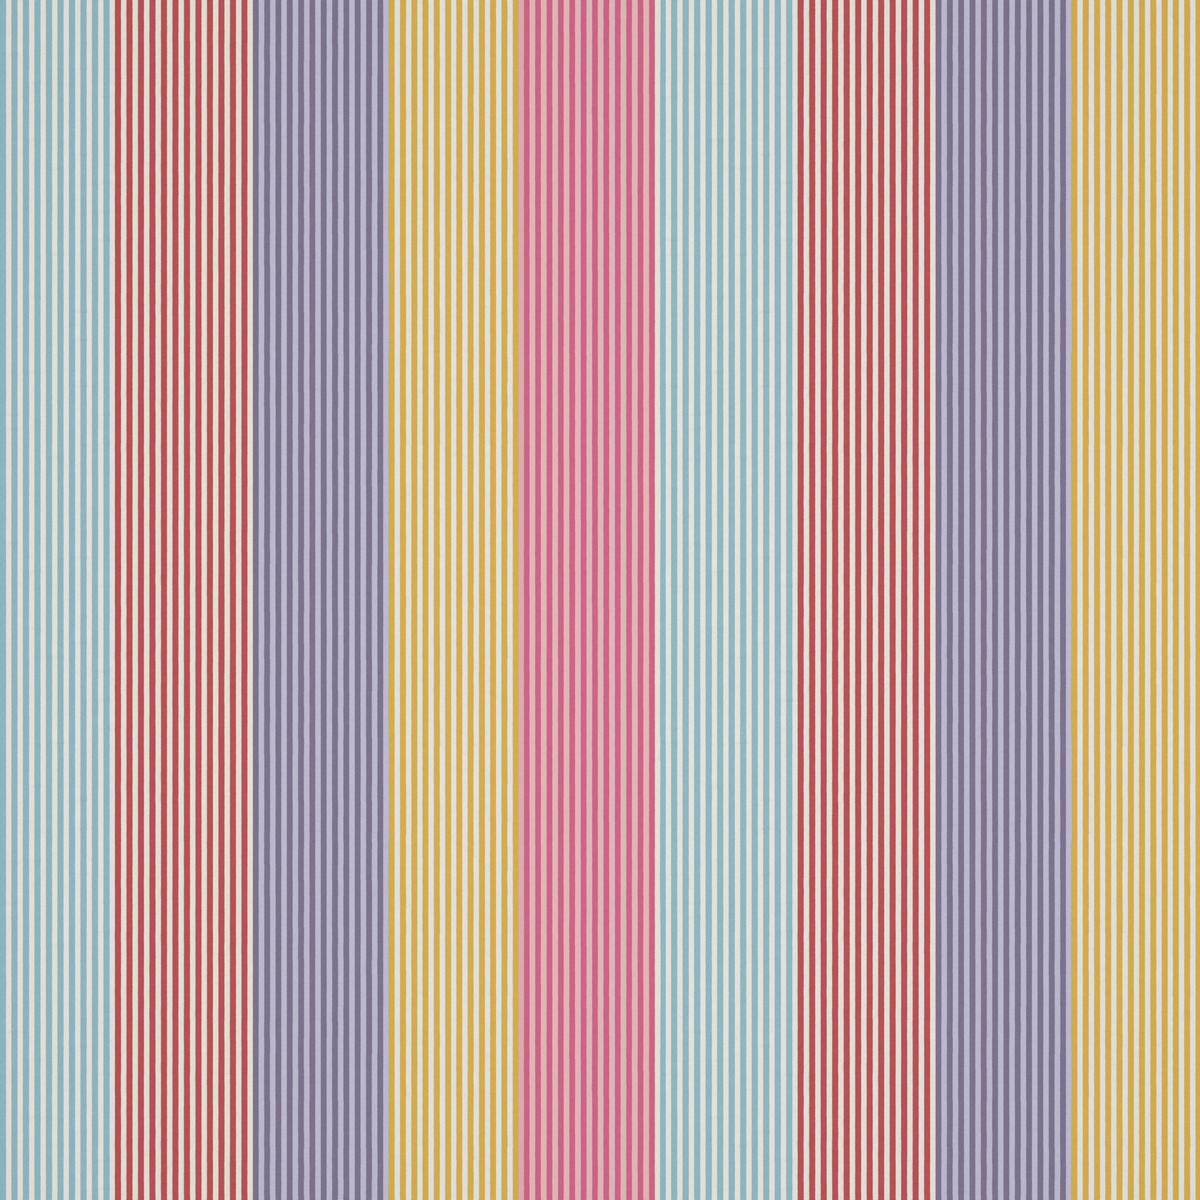 Funfair Stripe Grape/Cherry/Pineapple/Blossom Fabric by Harlequin